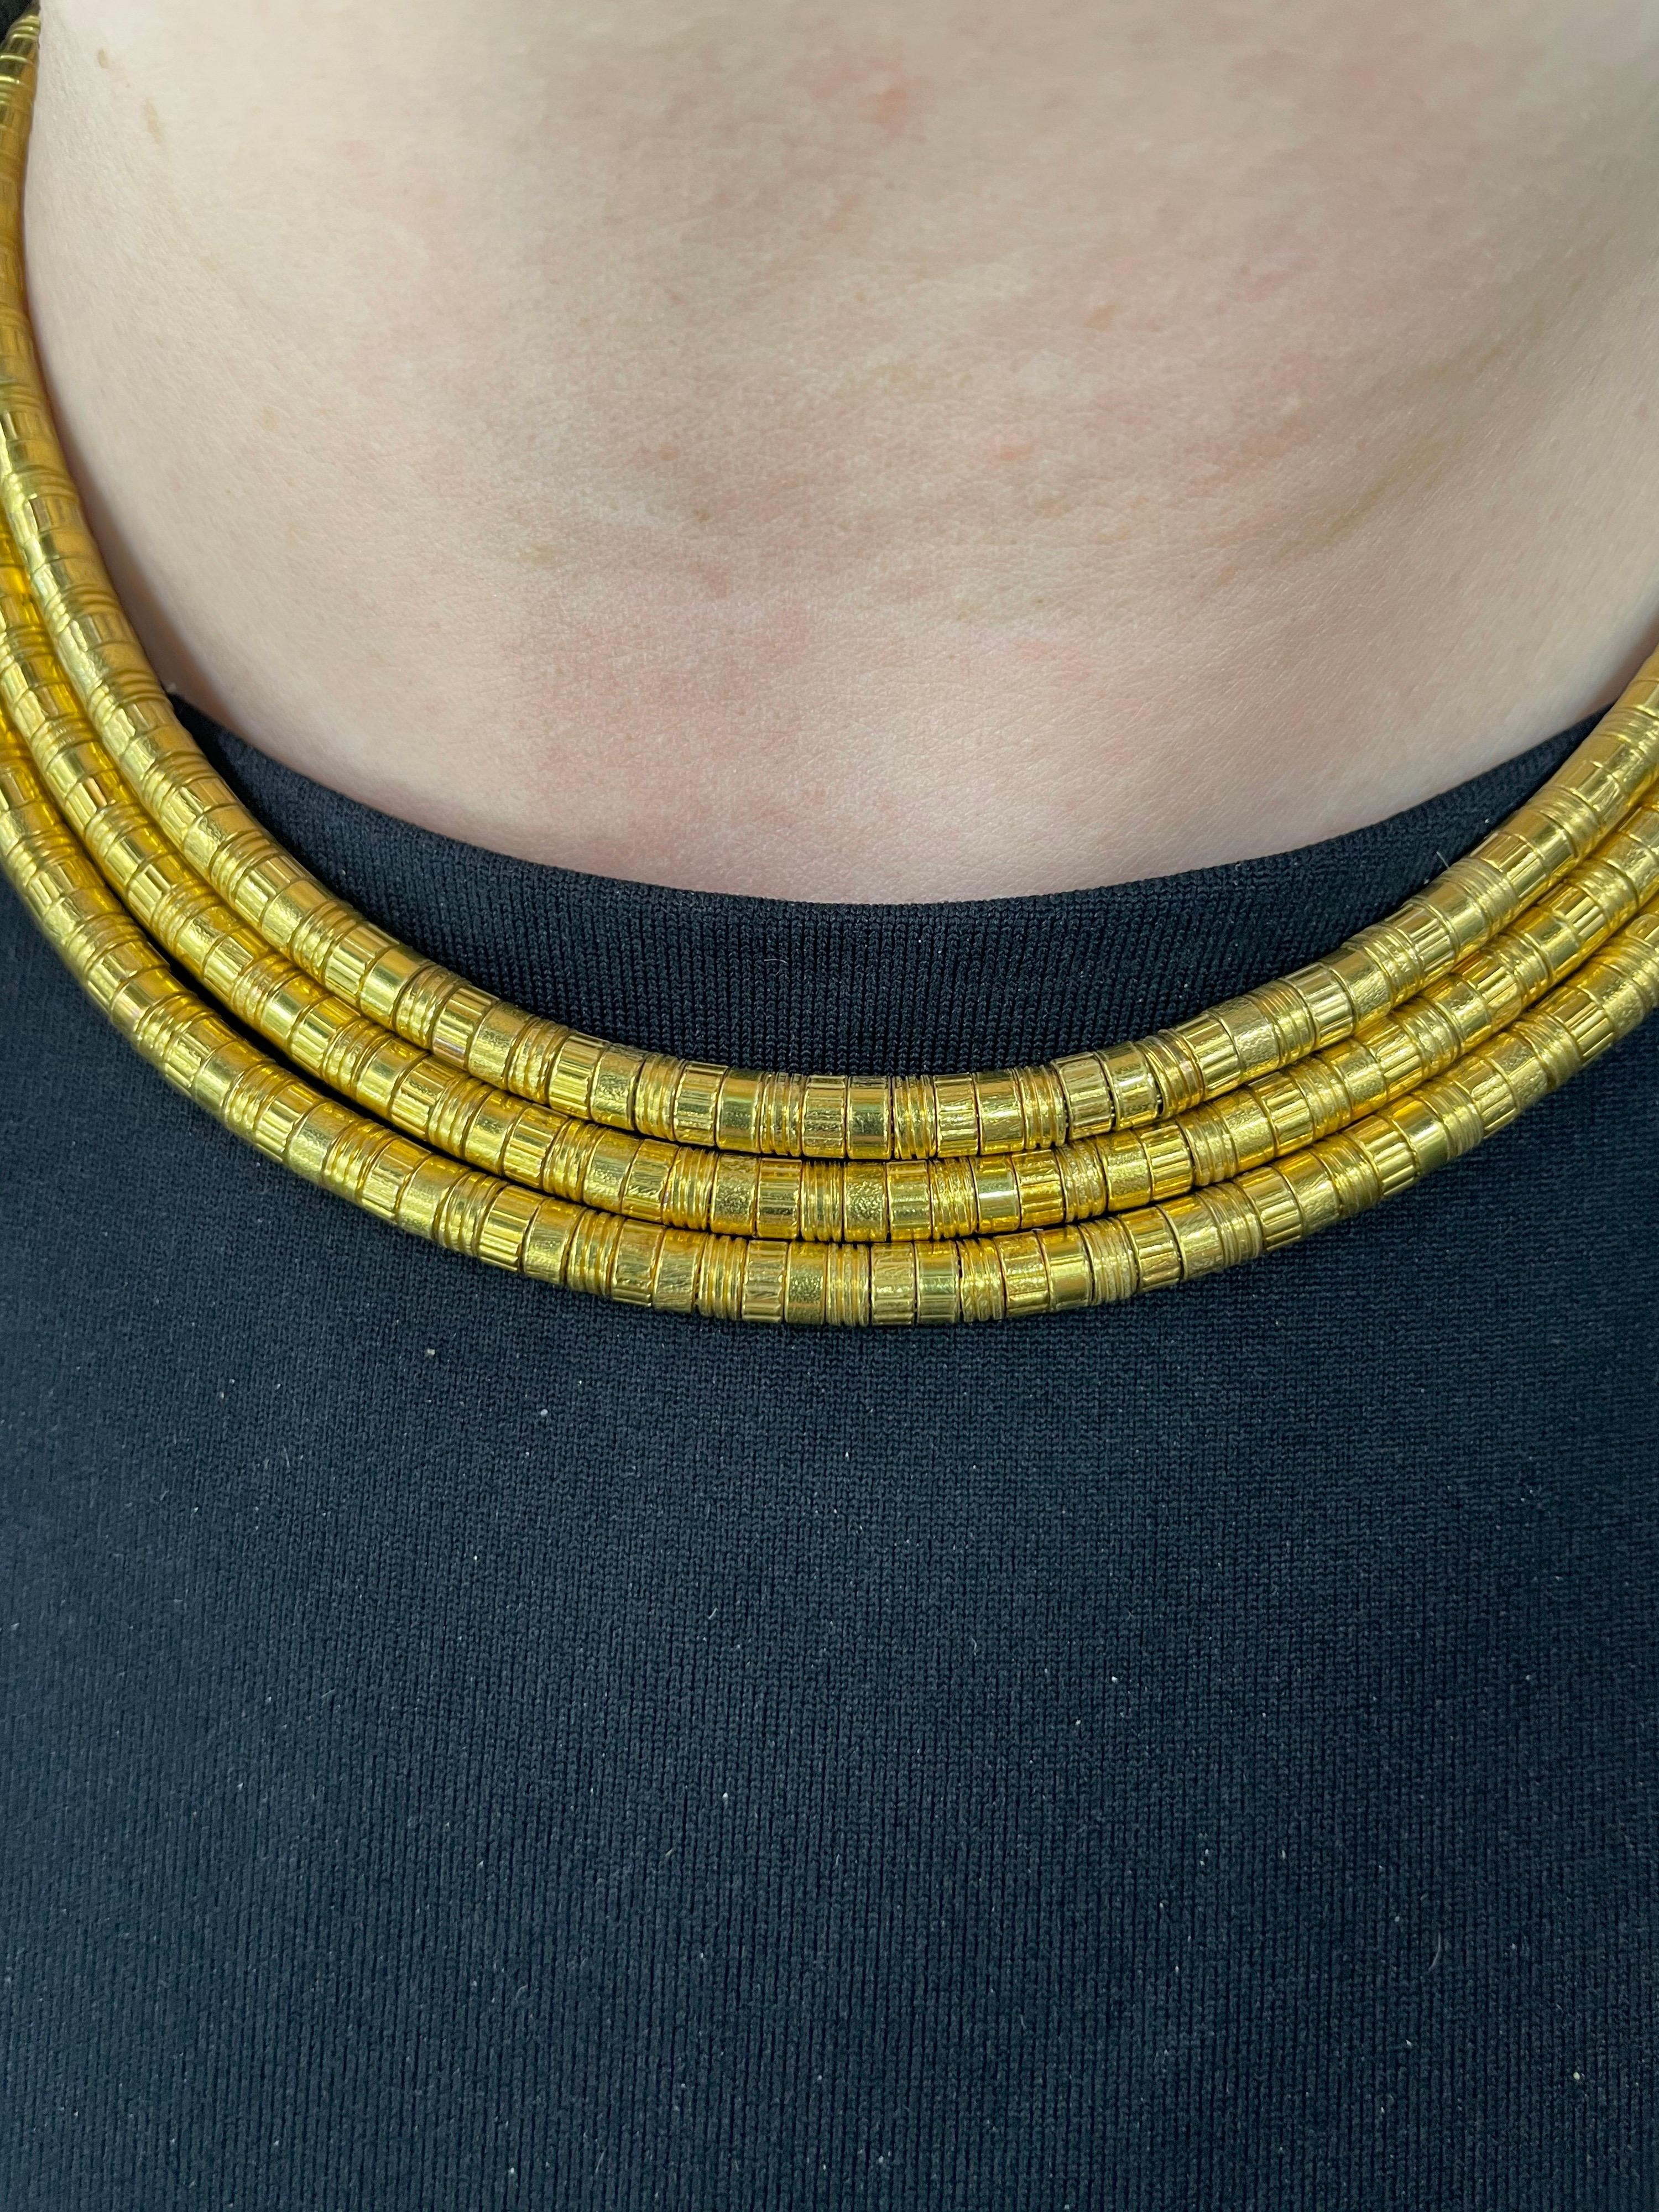 Ilias Lalaounis Greece 18 Karat Yellow Gold Three Row Collar Necklace 127 Grams 3